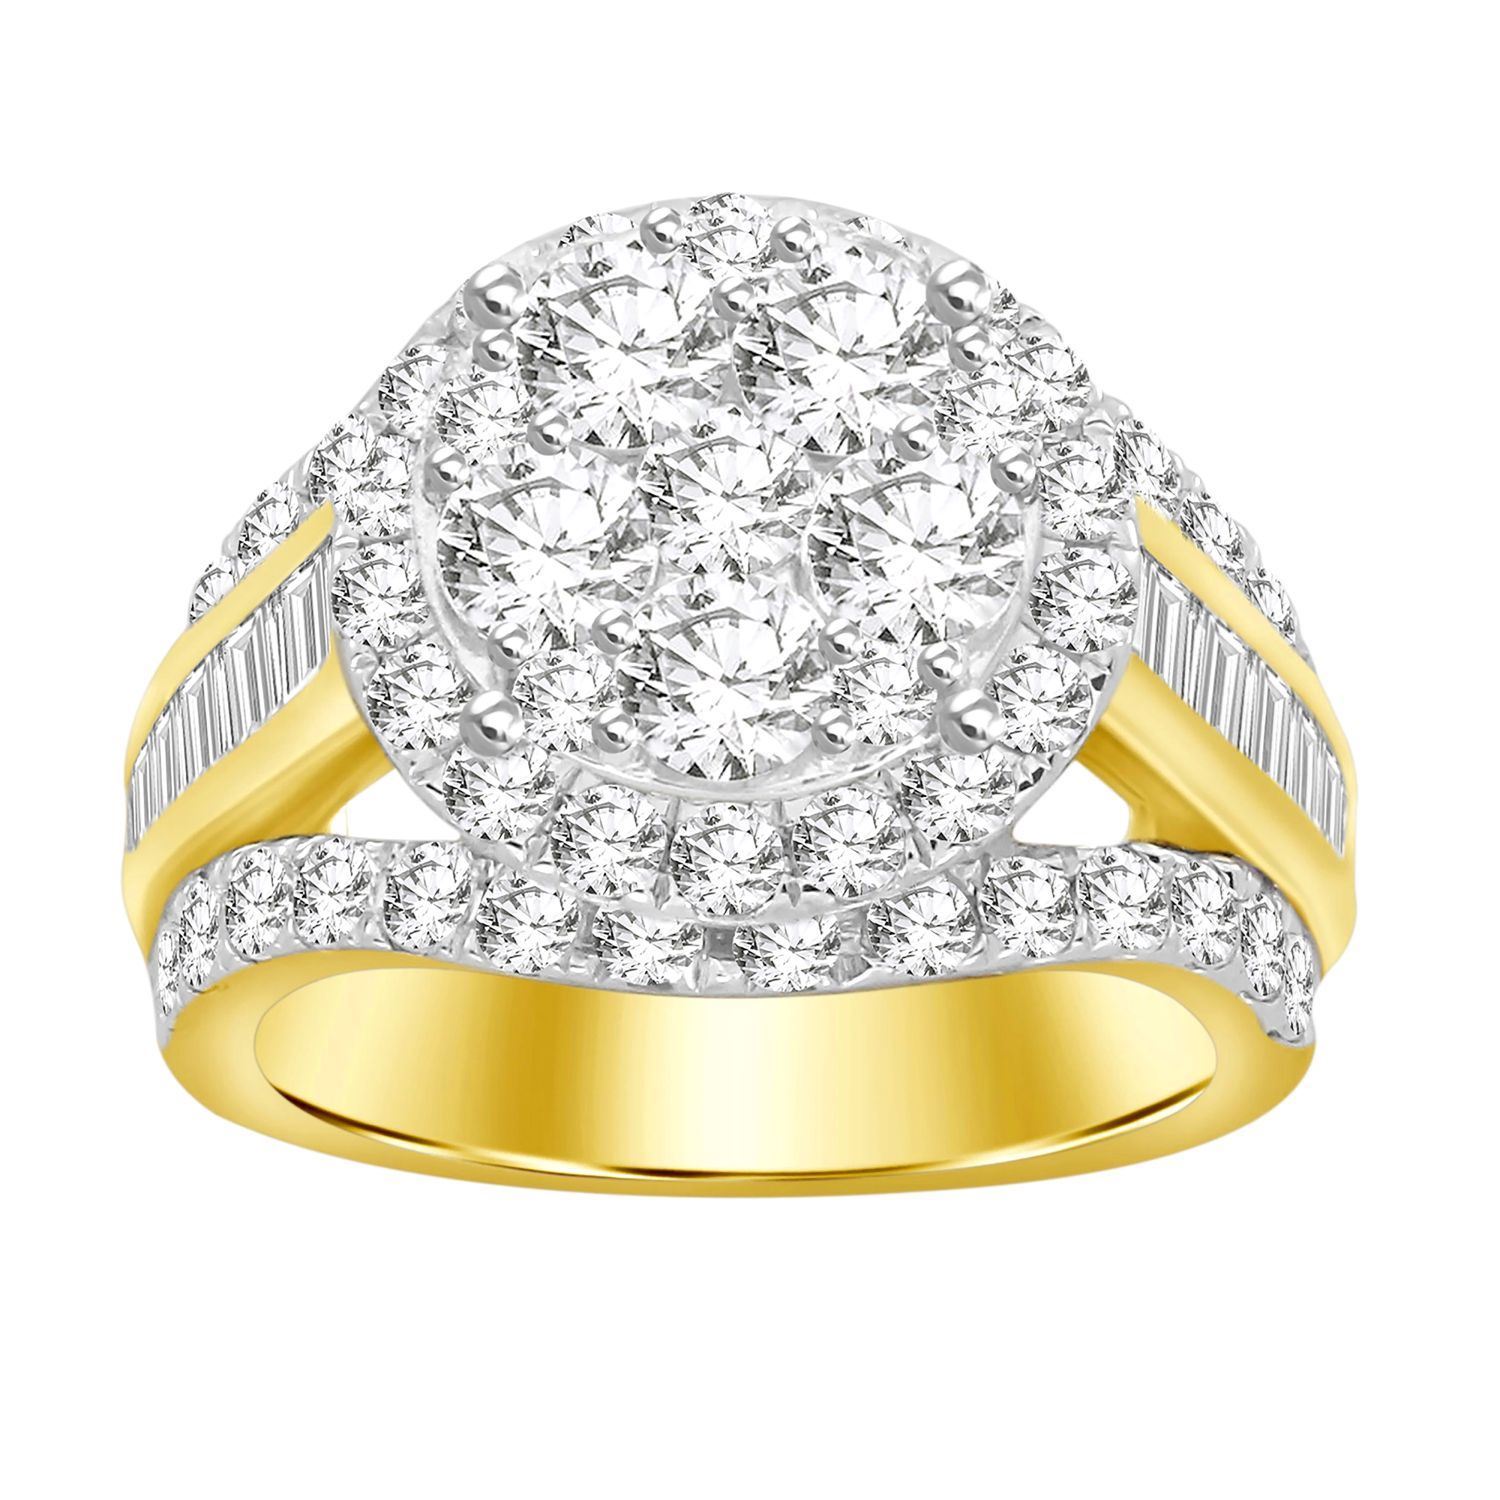 0018441_ladies-ring-3-ct-roundbaguette-diamond-10k-yellow-gold.jpeg